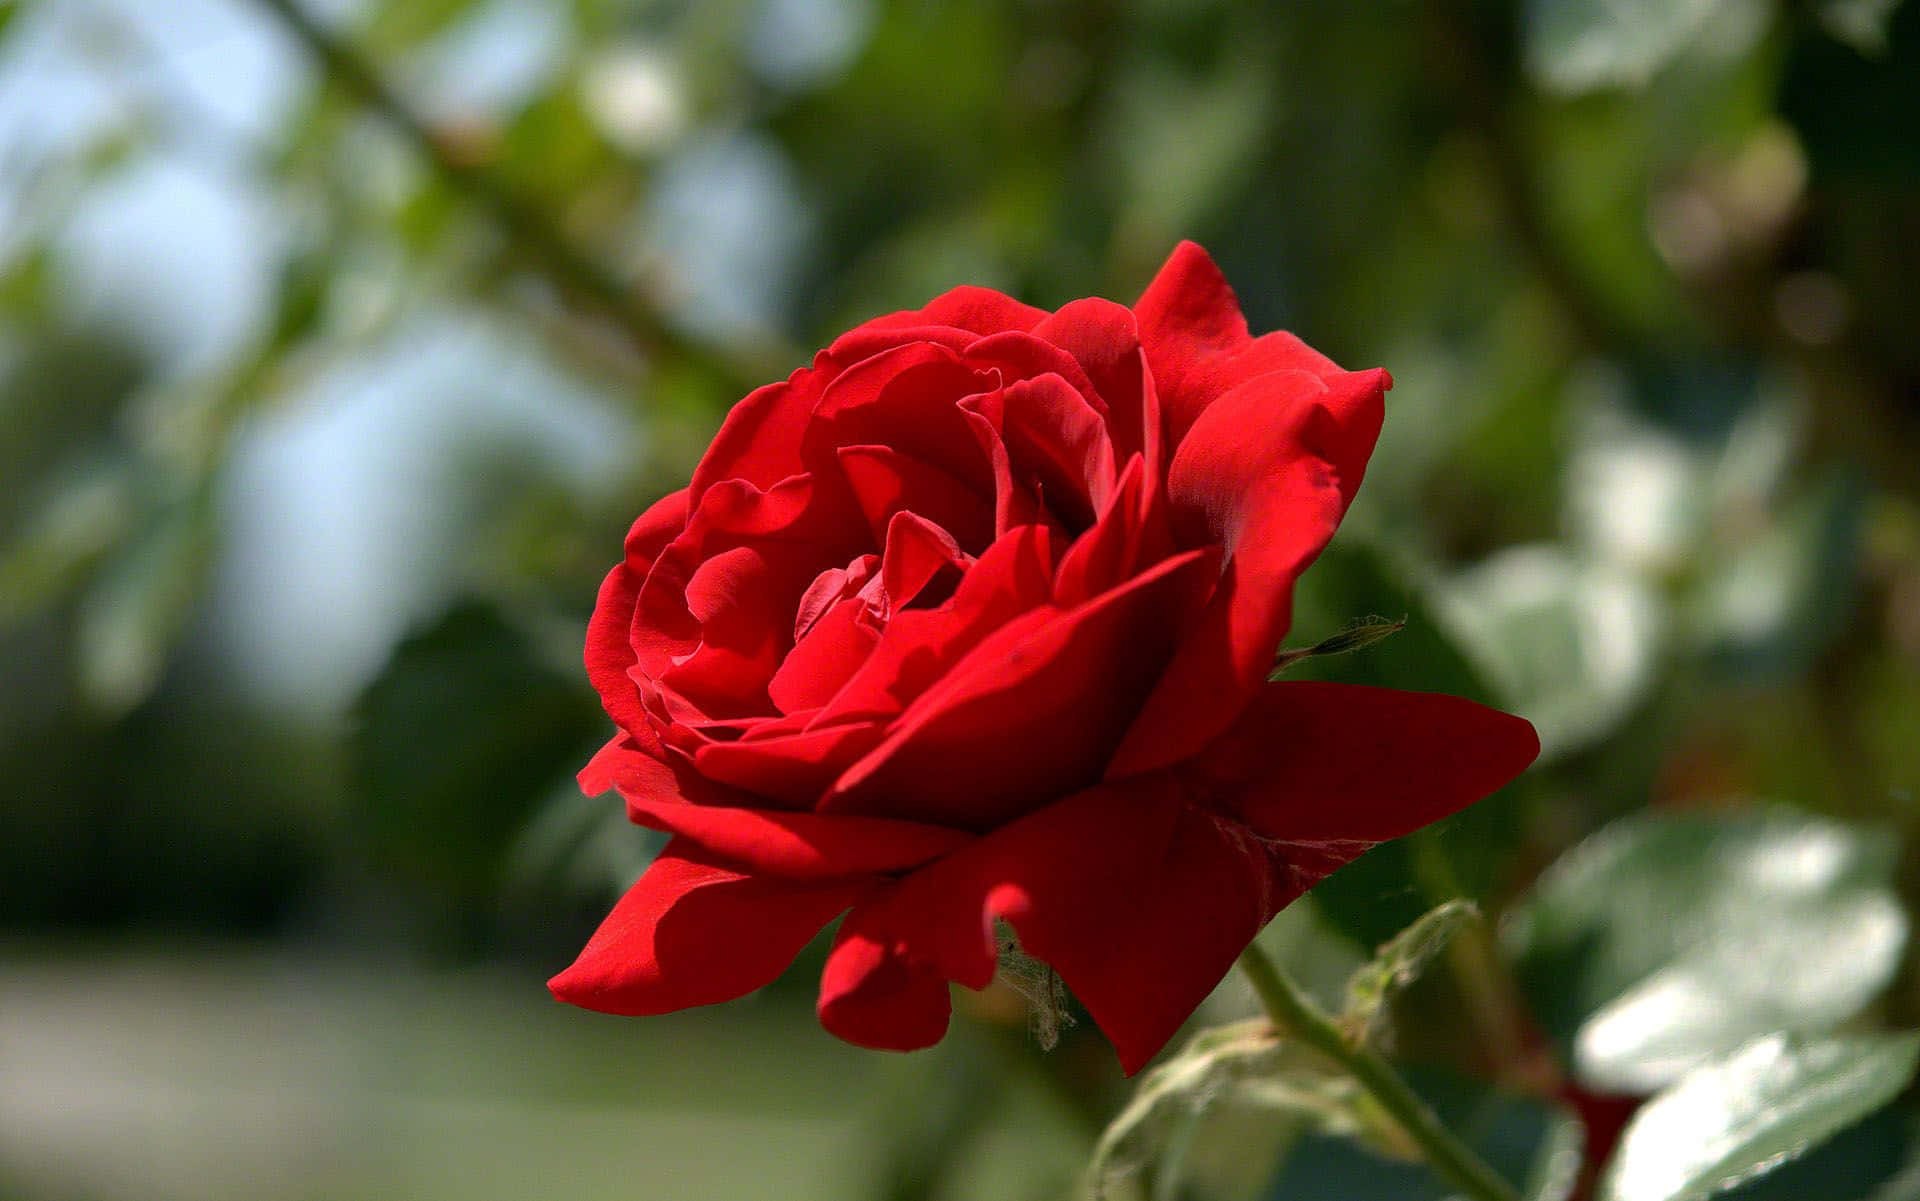 Muestratu Amor Con Una Hermosa Rosa Roja.